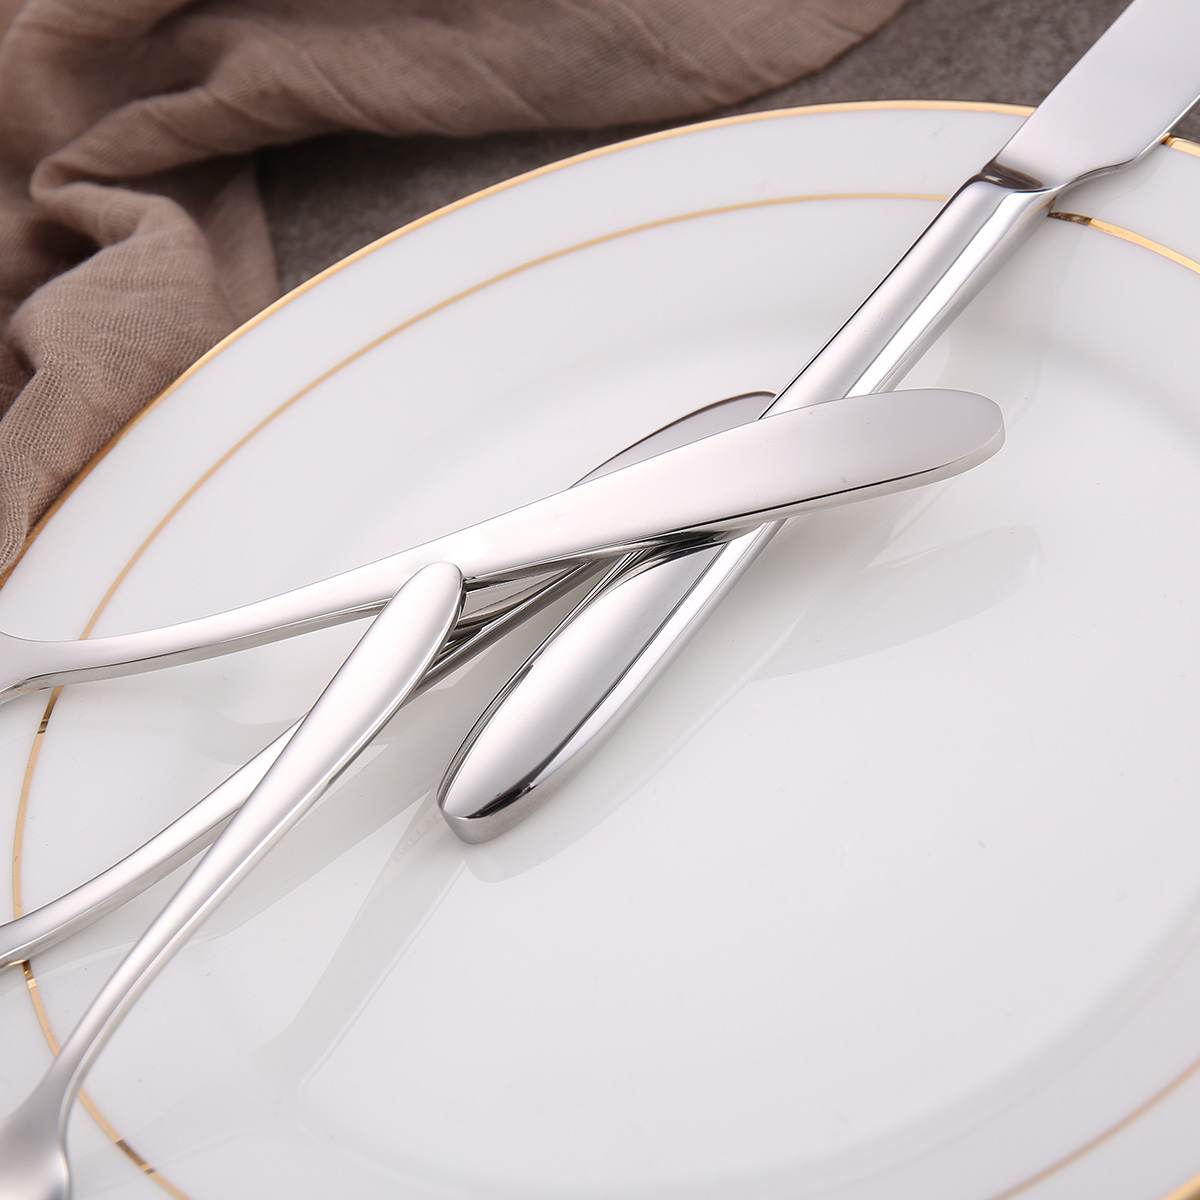 Buffet Rug Cutlery Series Banquet Stainless Steel 18/10 gastlando 